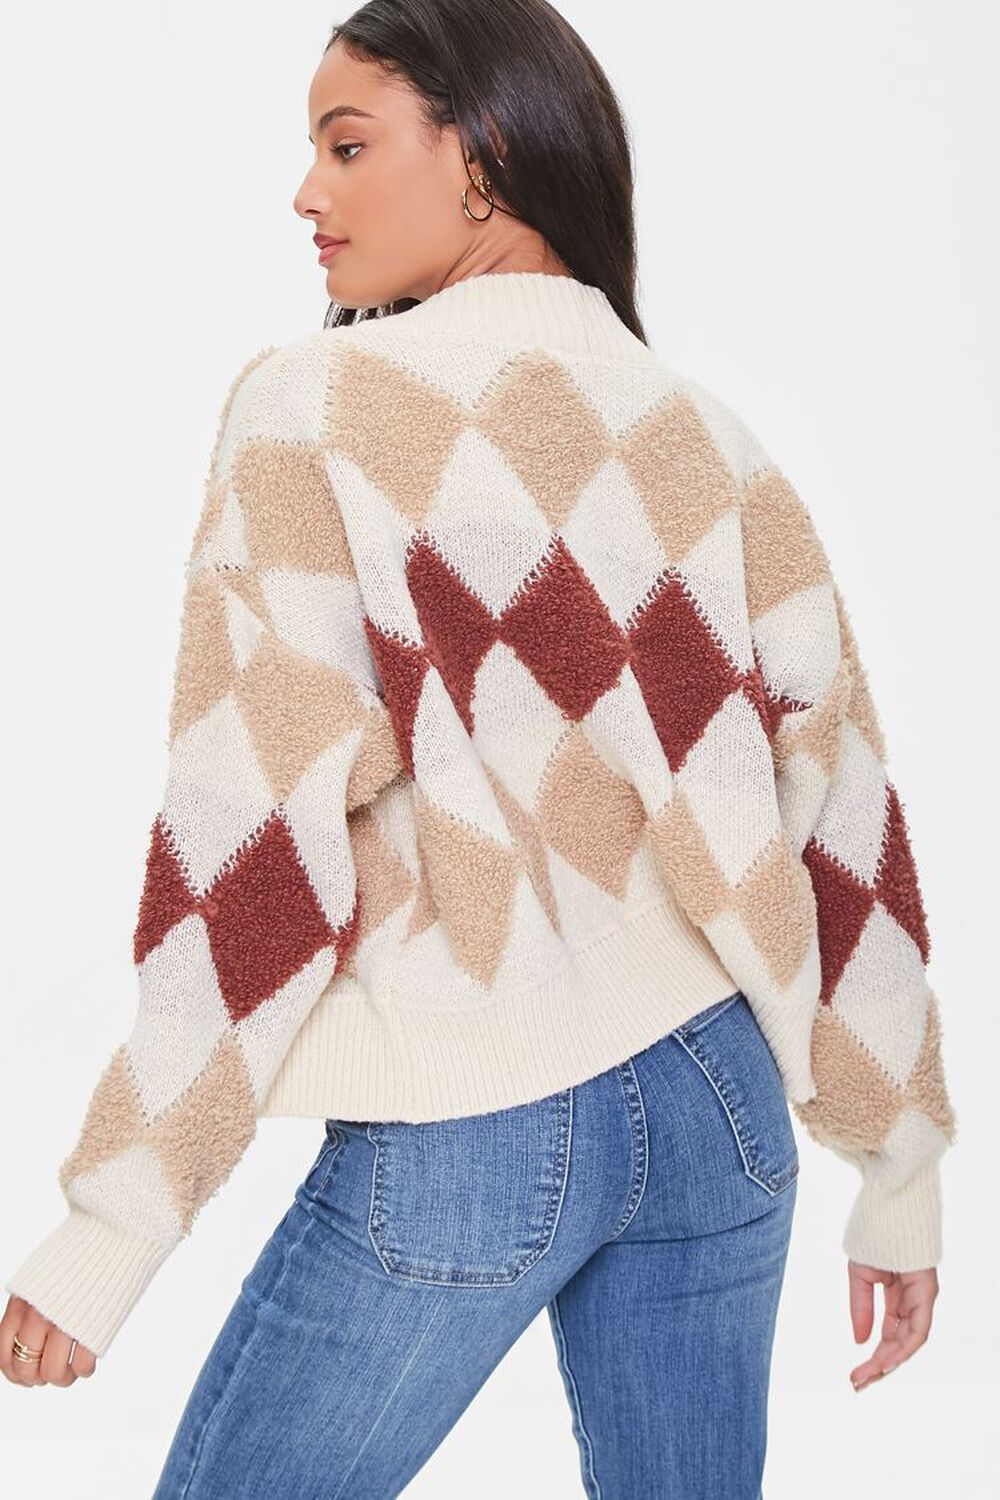 Checkered Cardigan Sweater, image 3